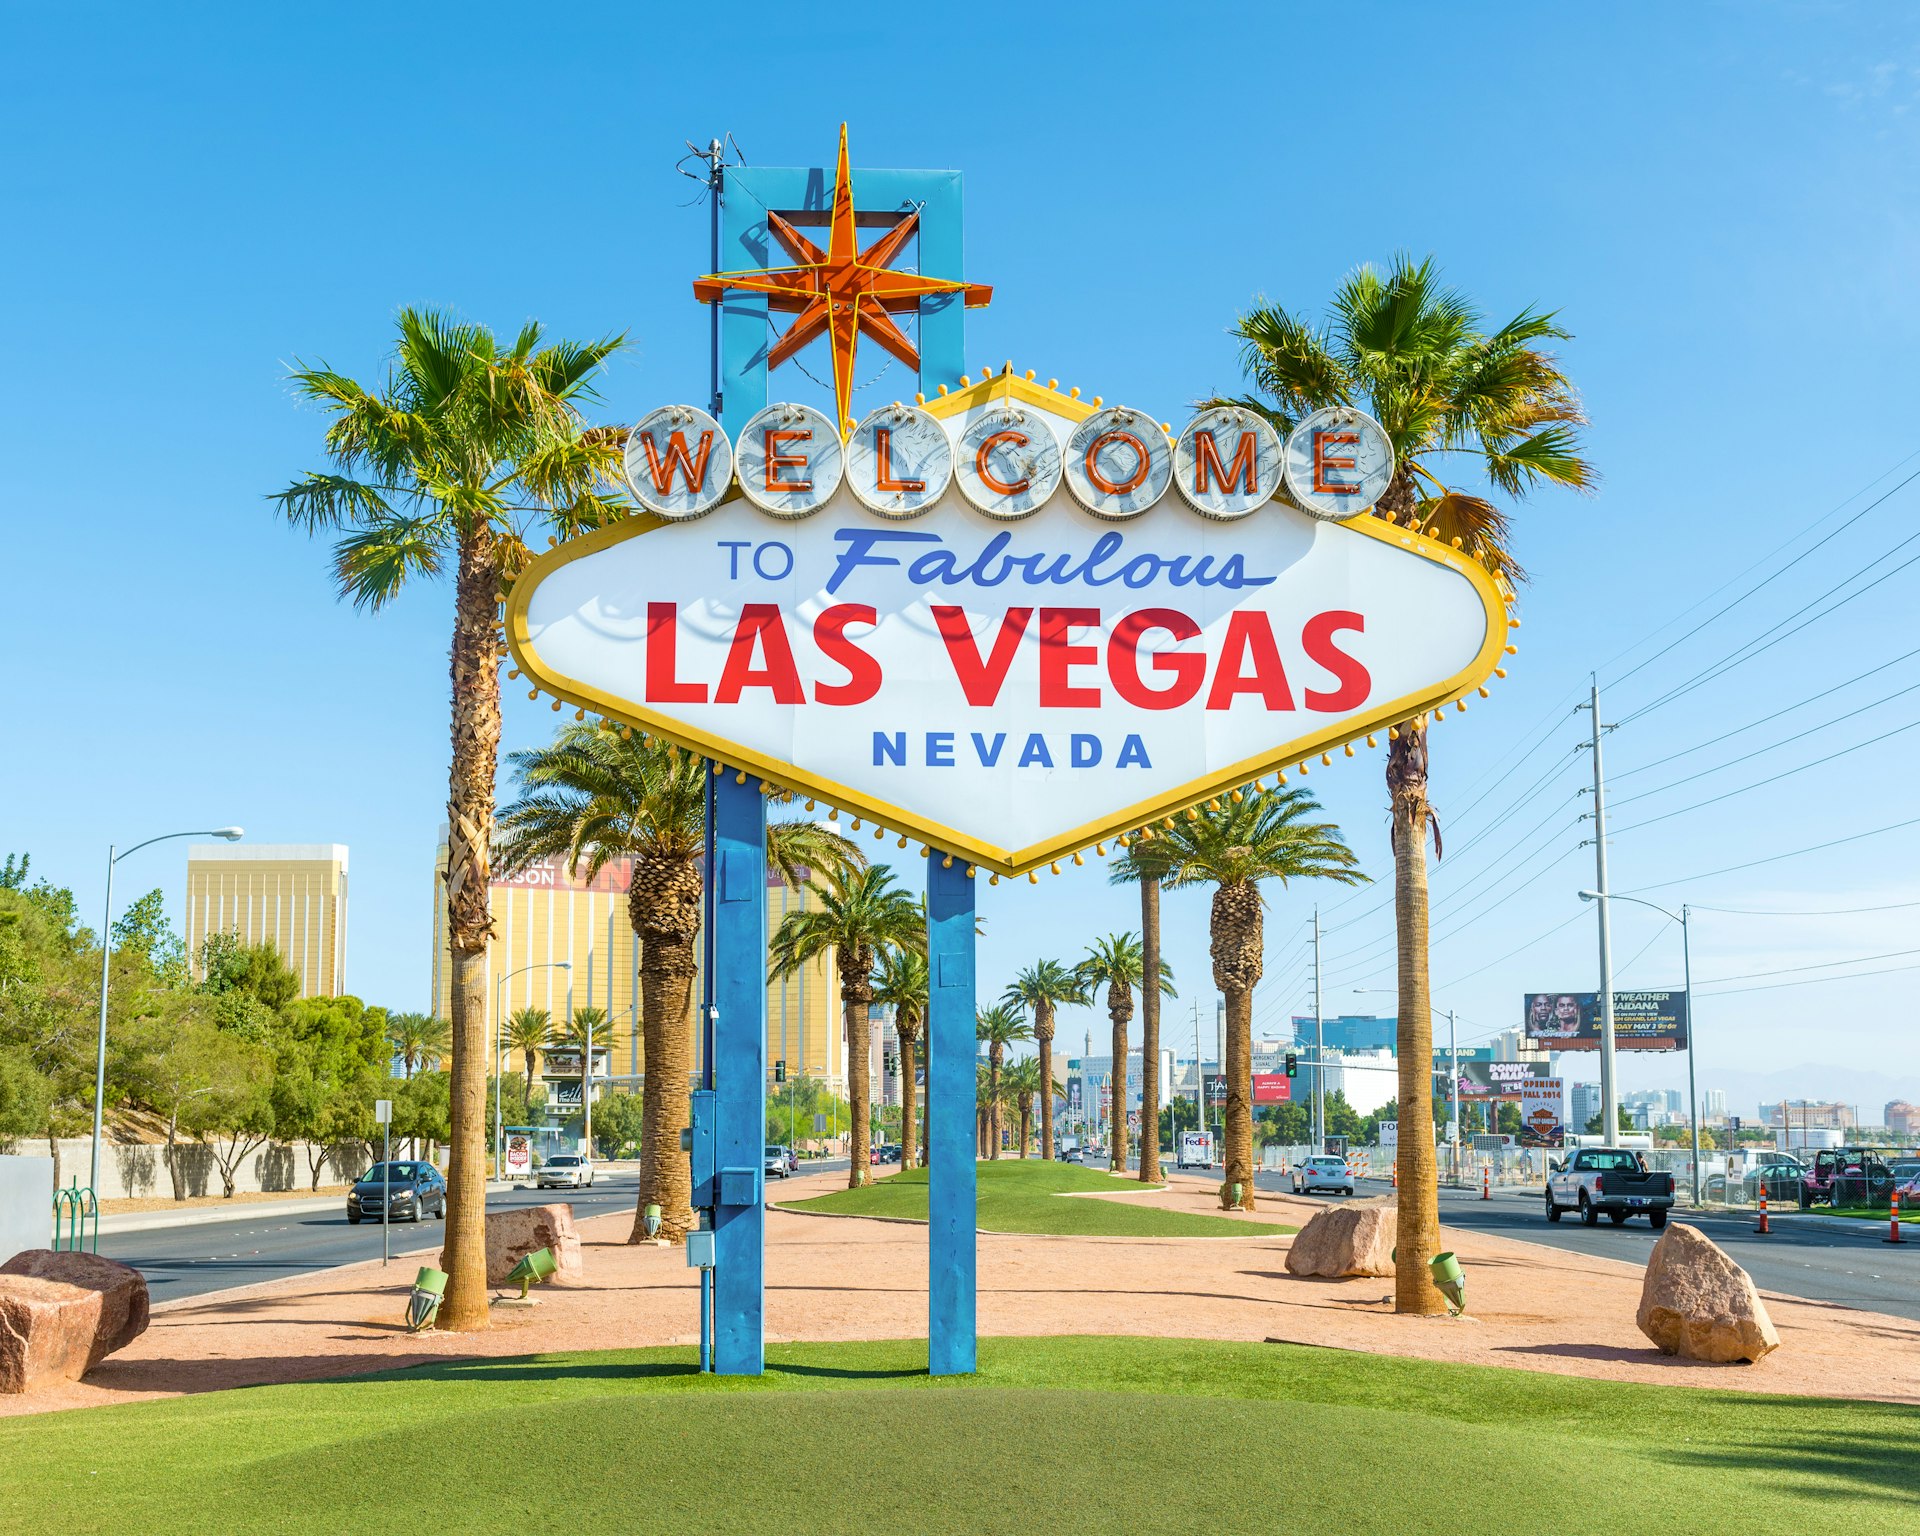 "Welcome To Fabulous Las Vegas" sign in Las Vegas, Nevada